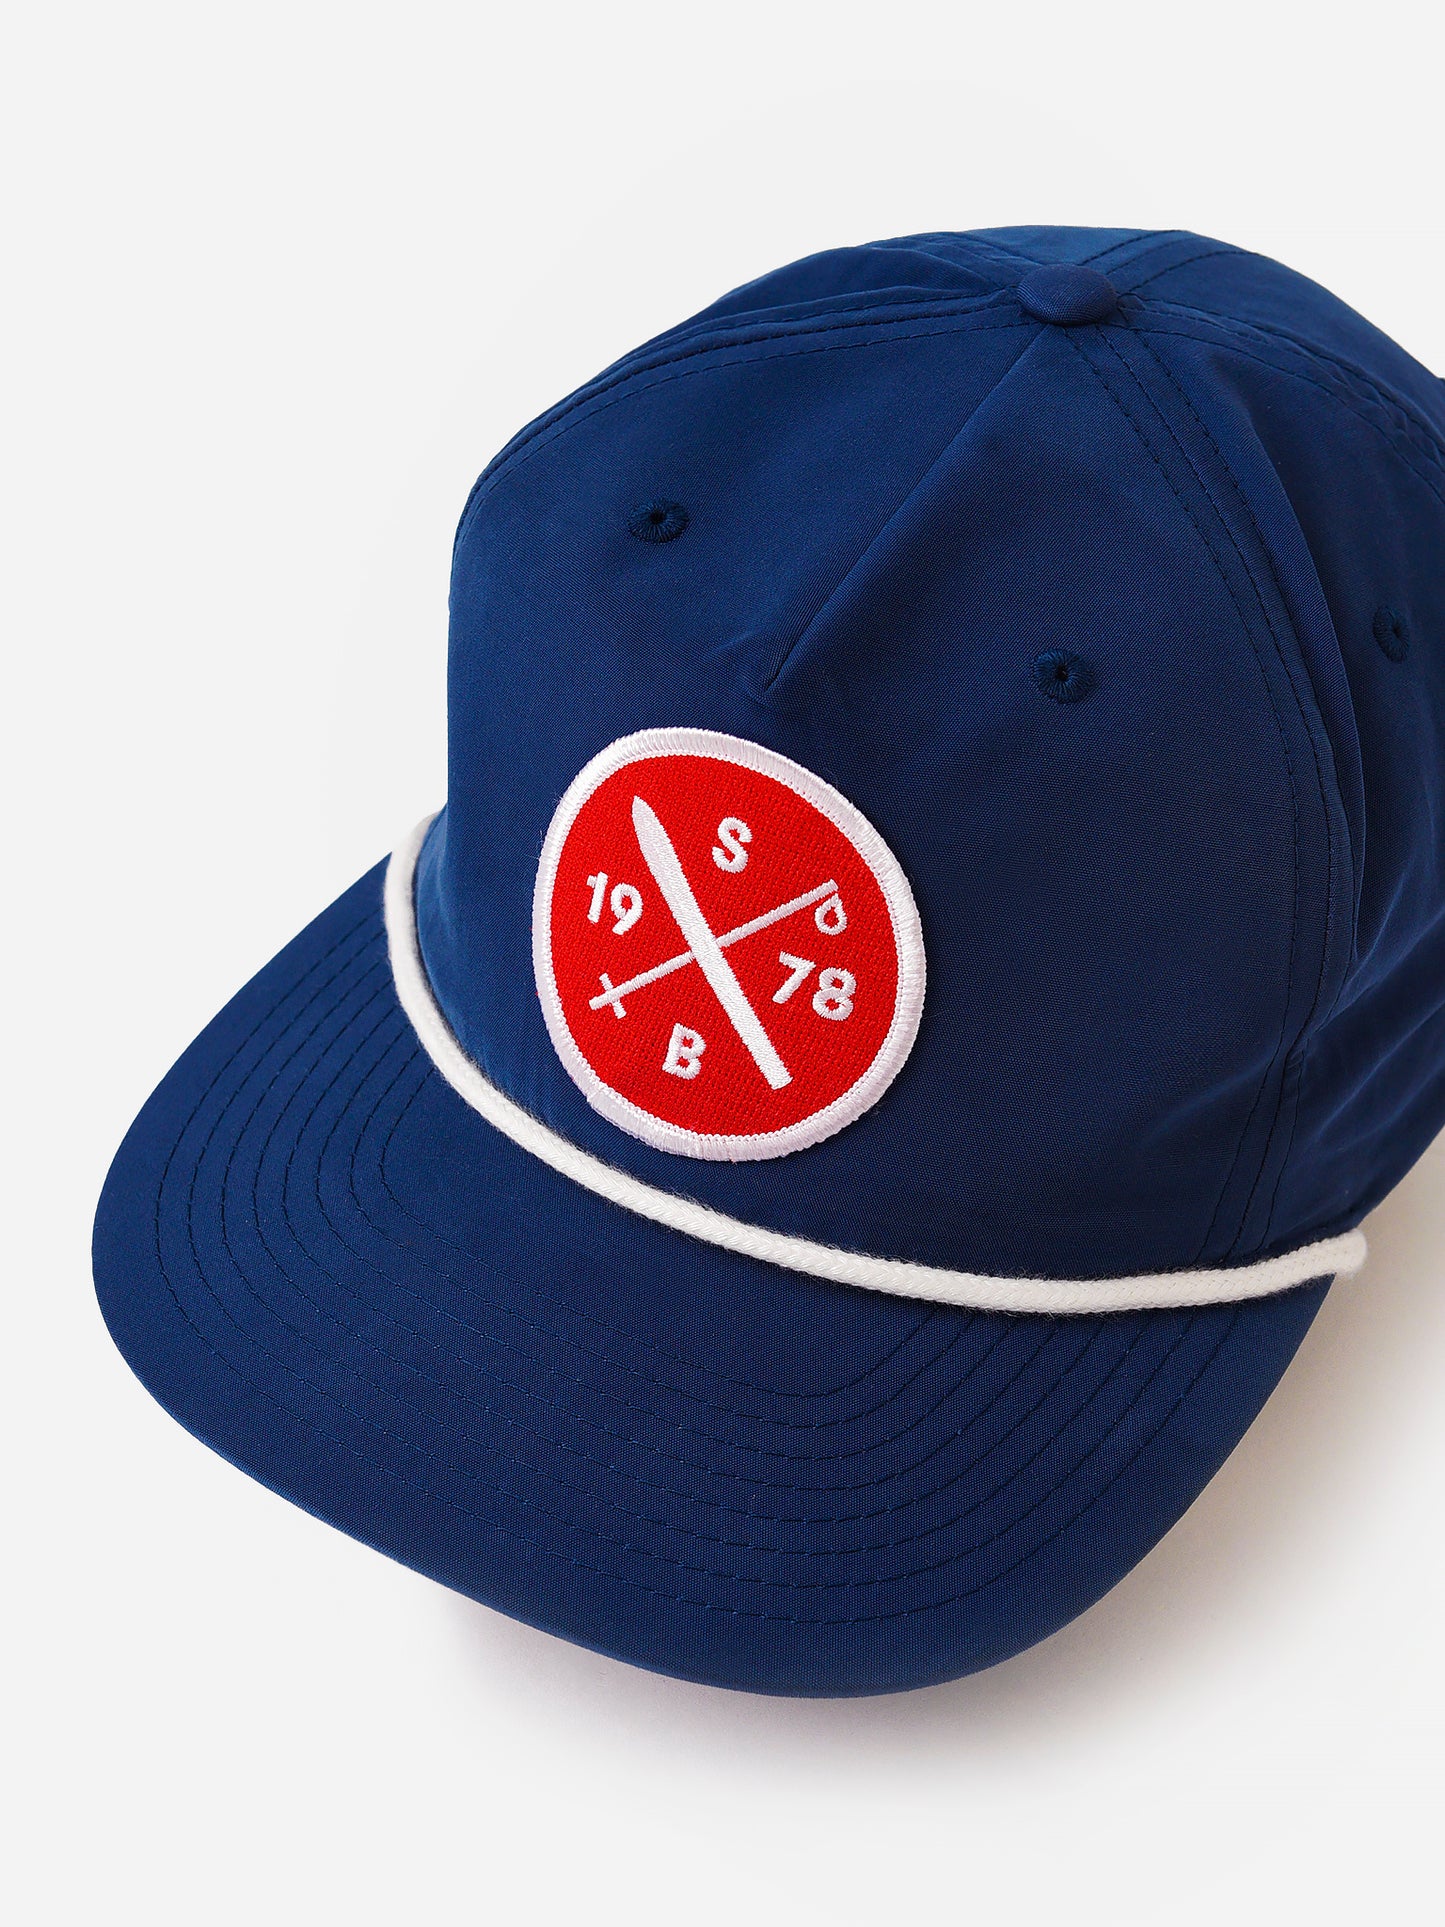 Saint Bernard Ski Cross Snapback Hat